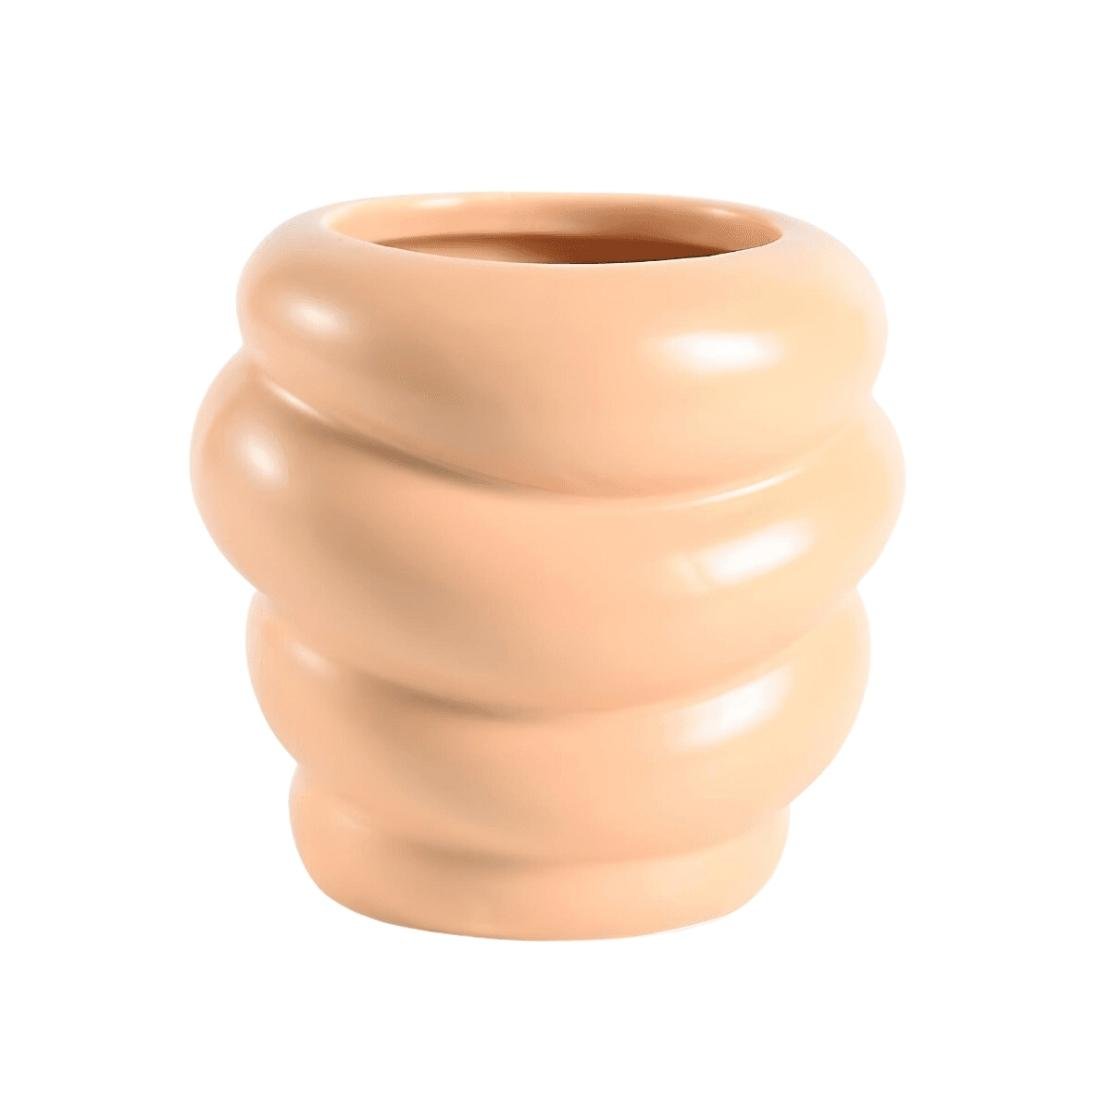 Low, orange ceramic honeycomb vase